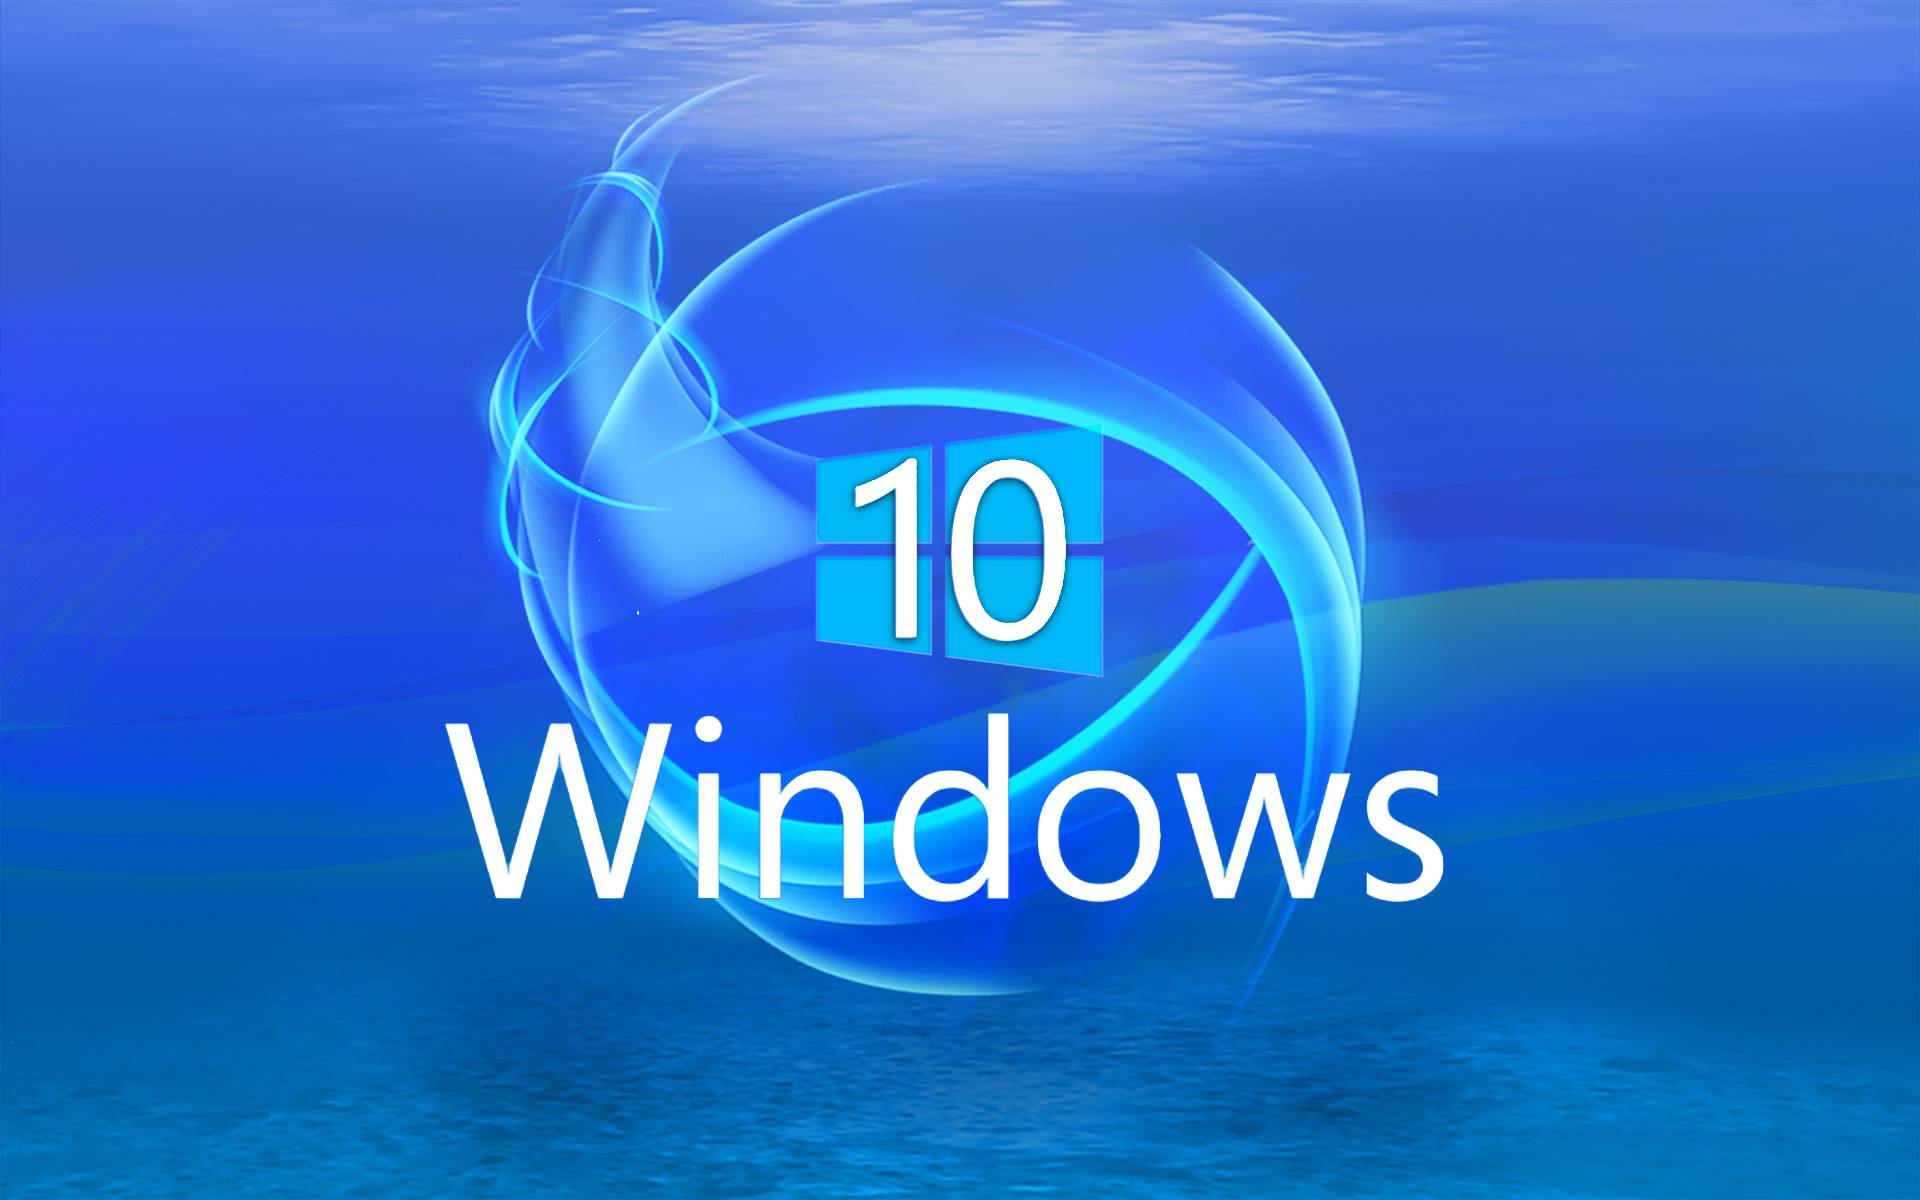 Windows 10 photos from the lock screen